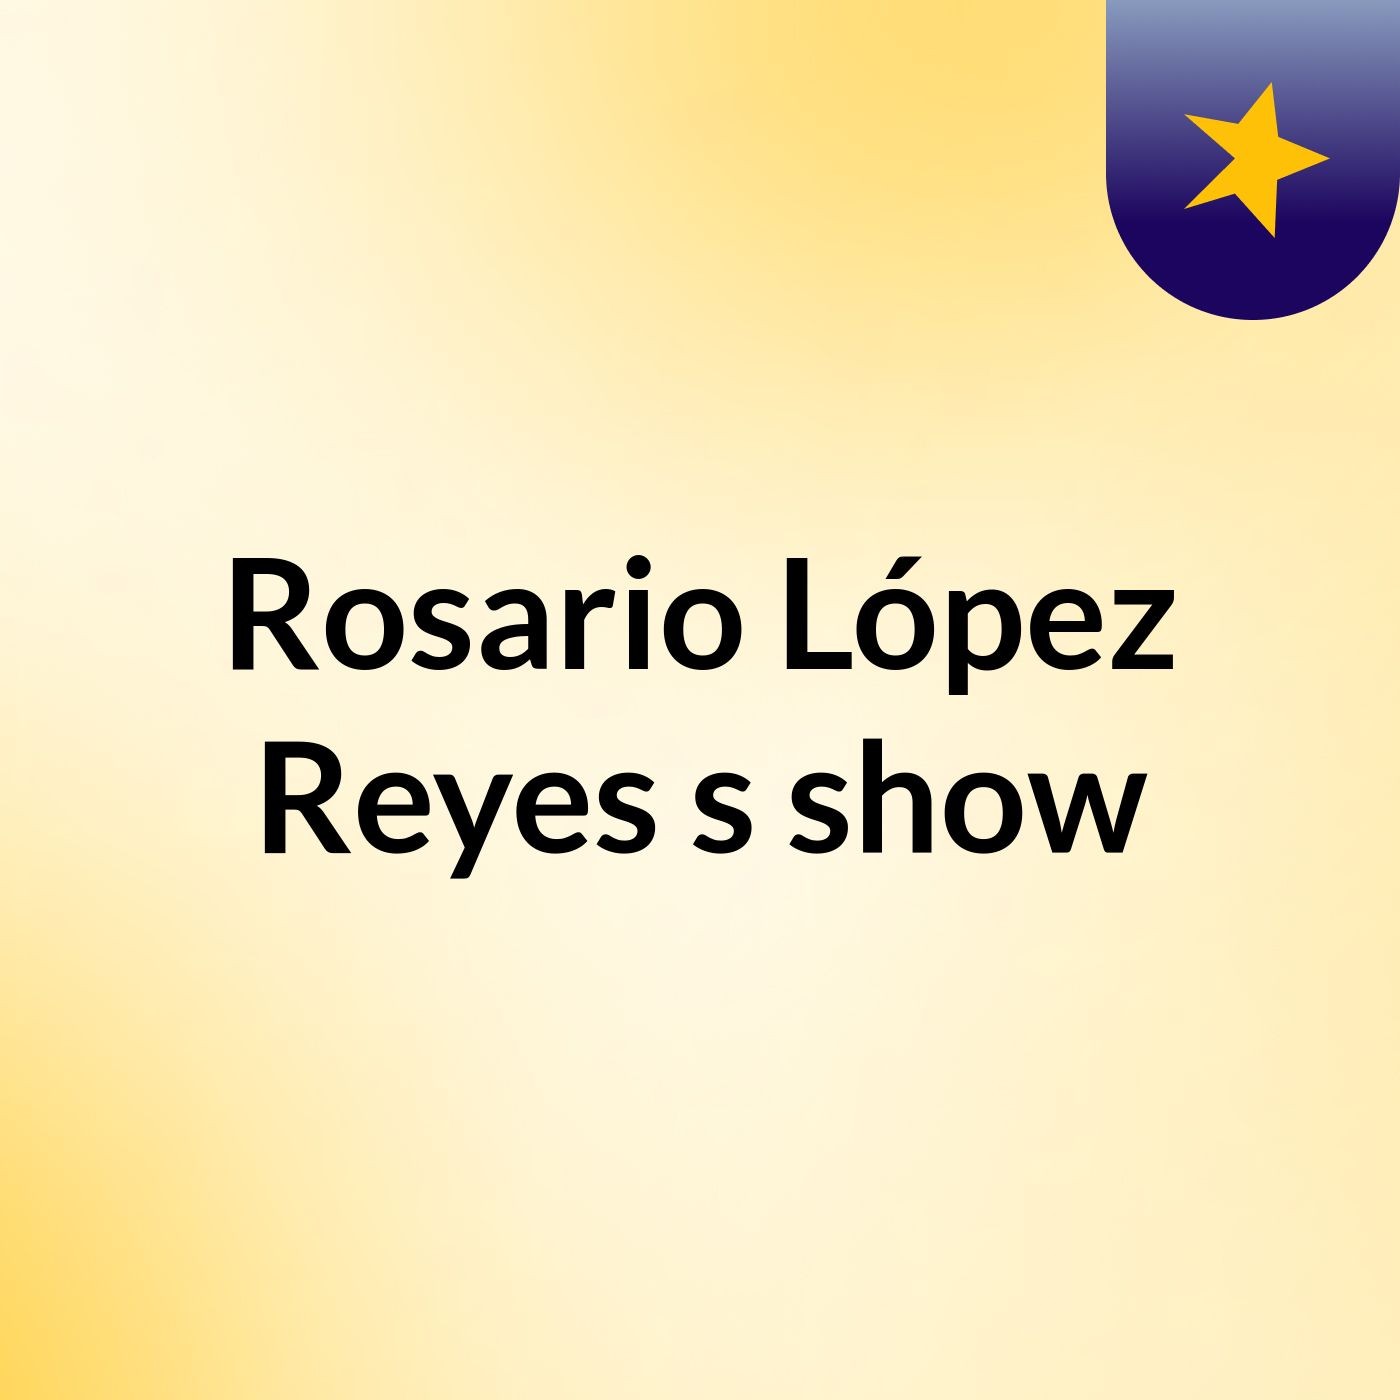 Episodio 6 - Rosario López Reyes's show